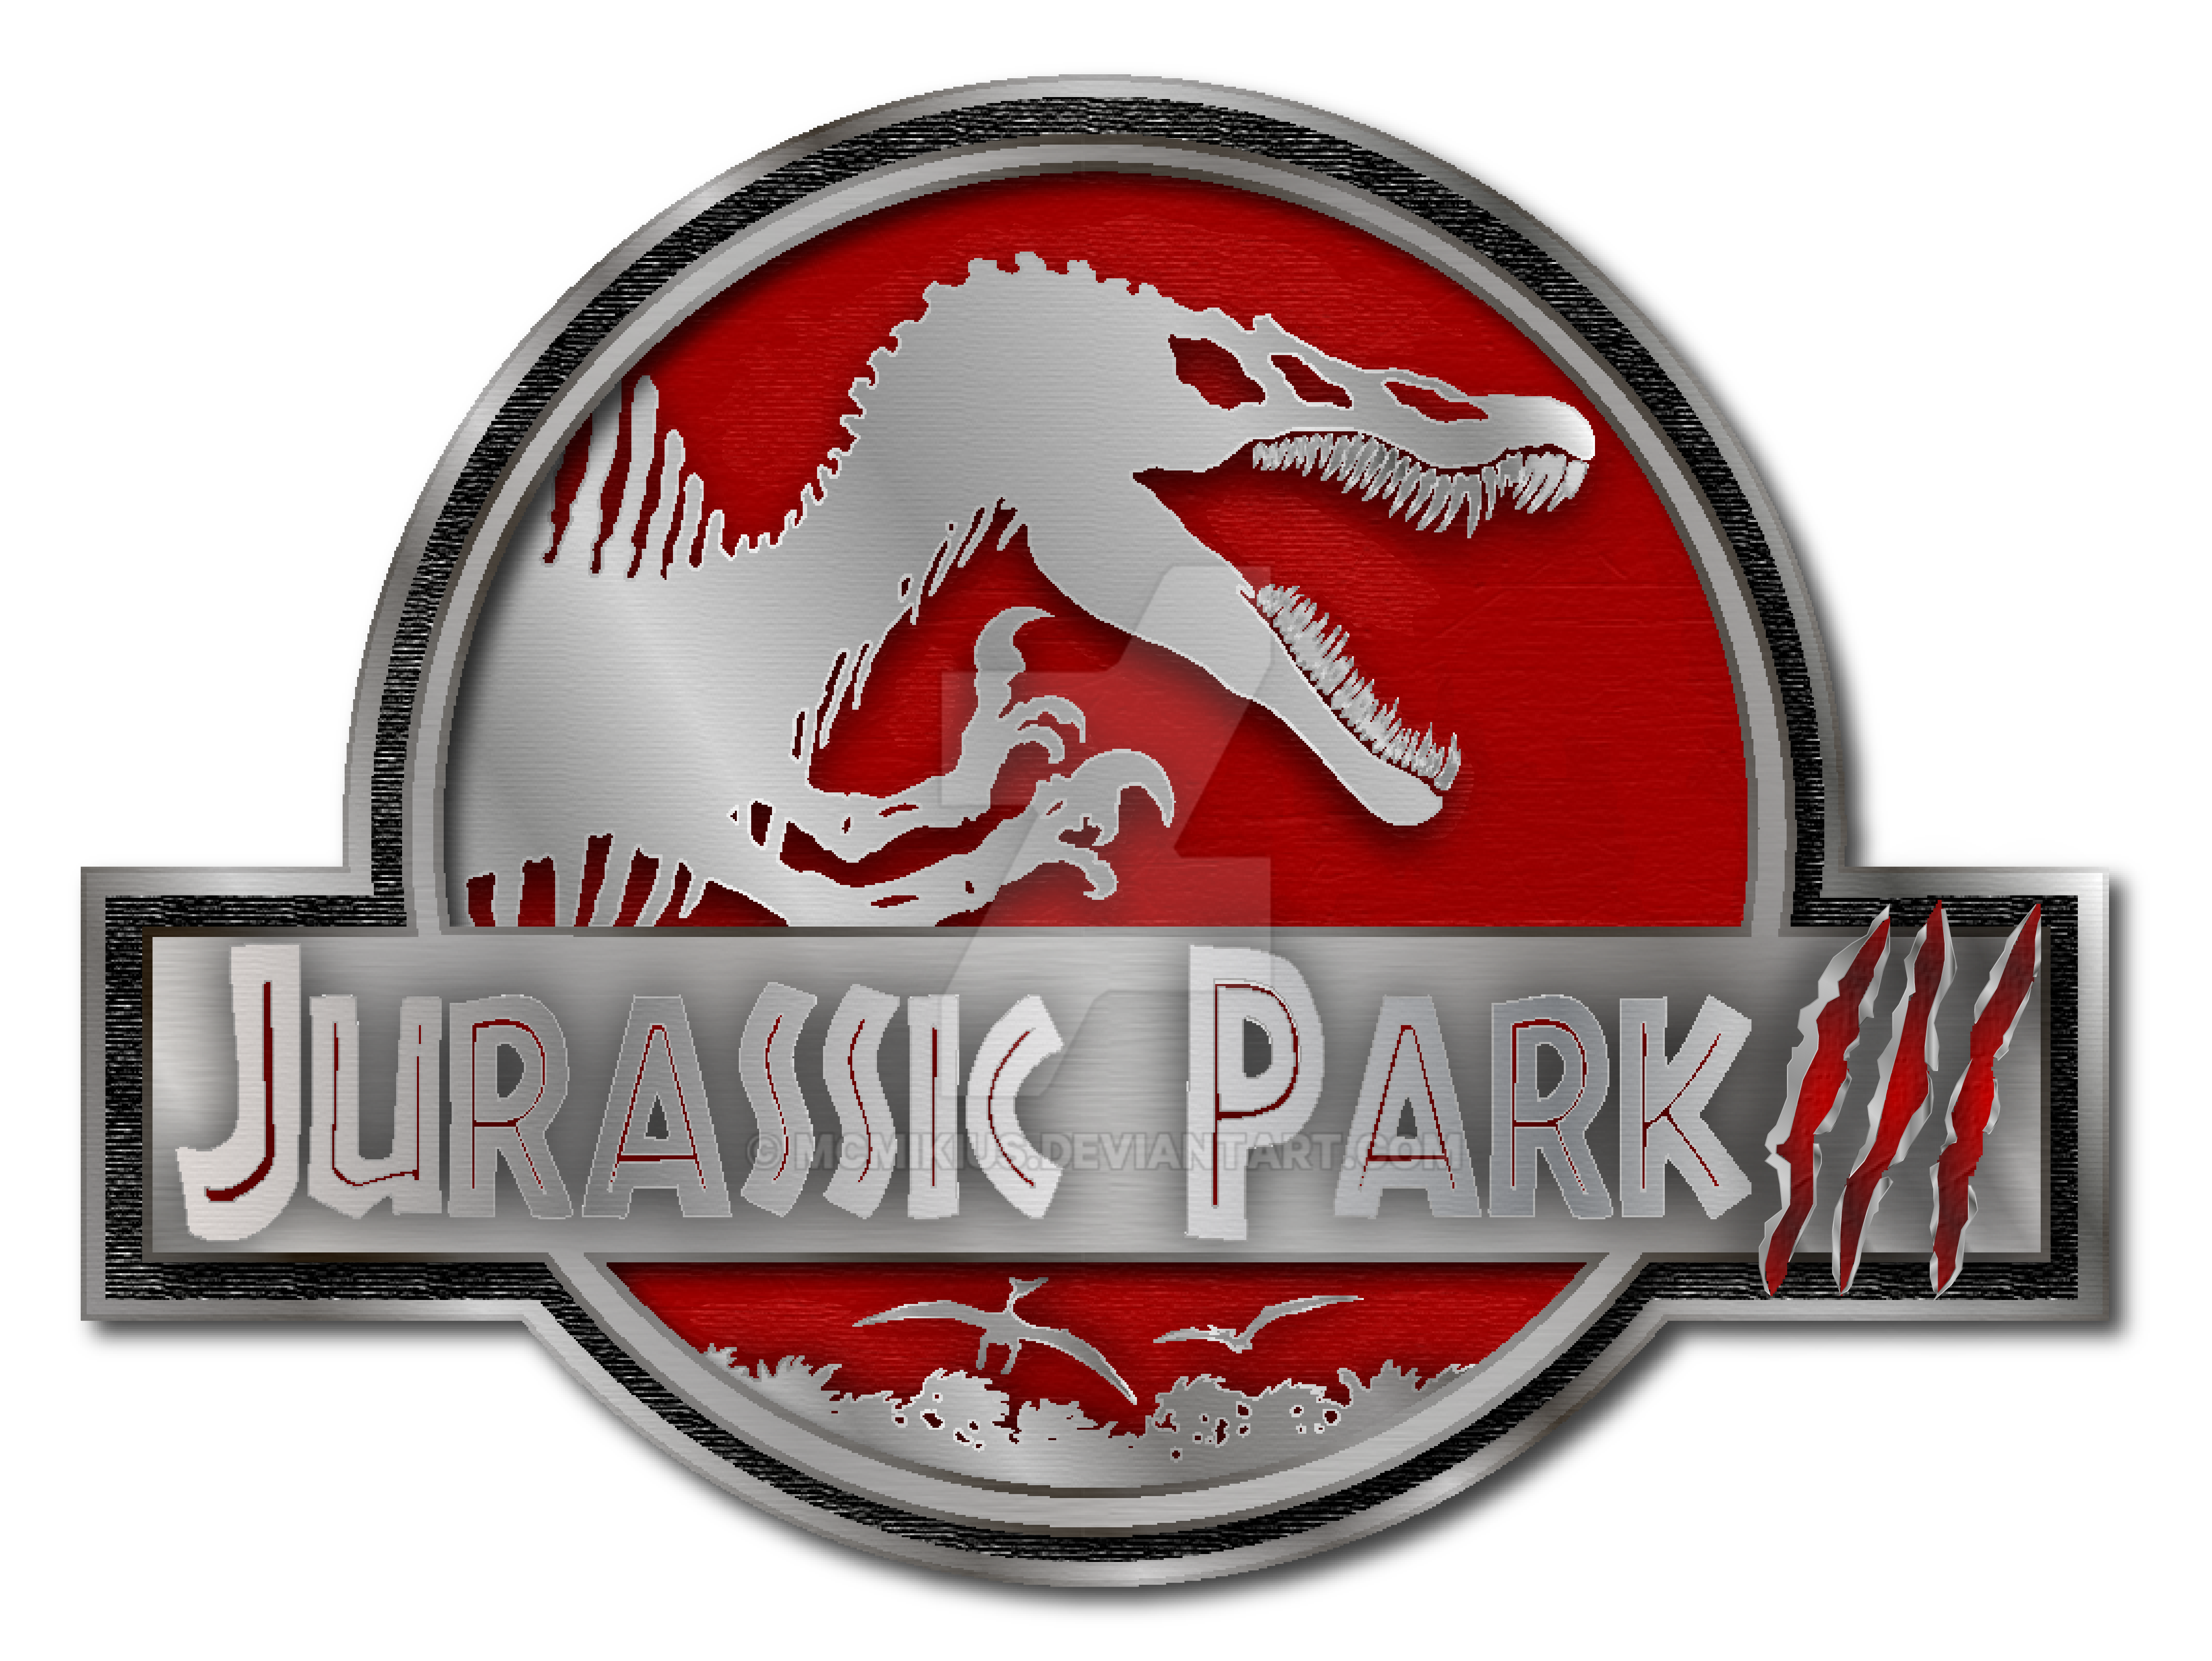 jurassic park 3 logo by mcmikius on DeviantArt